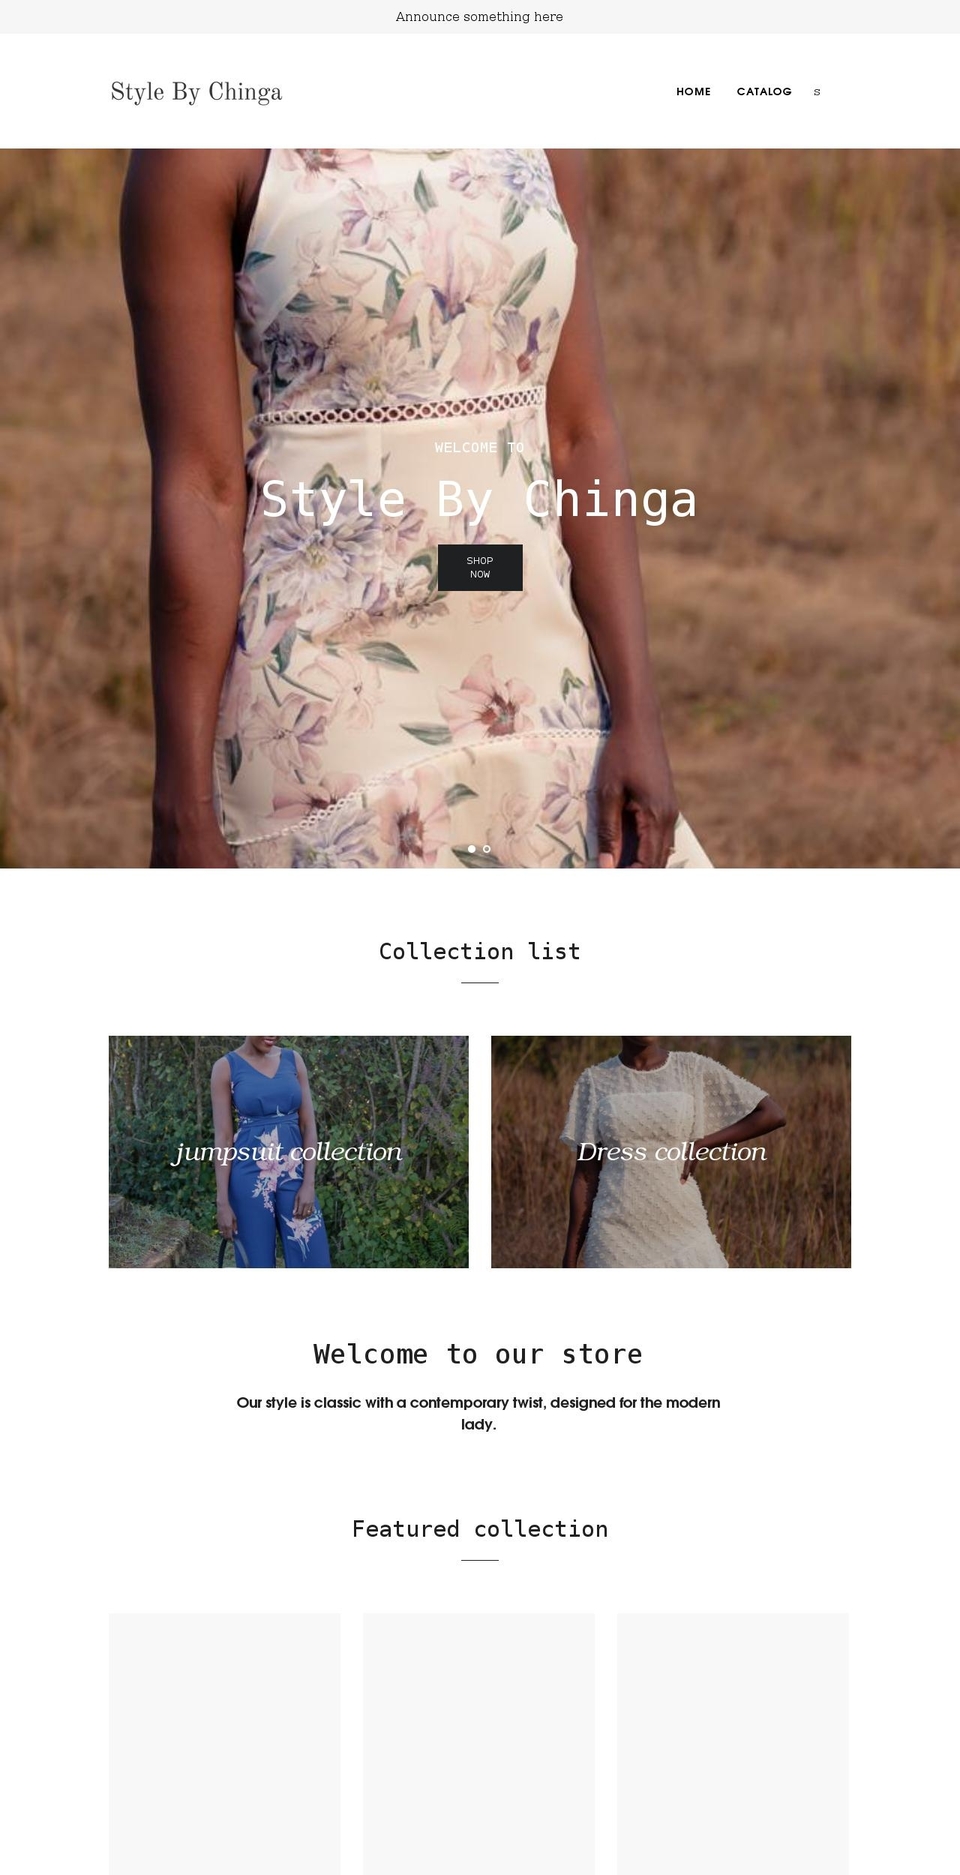 stylebychinga.com shopify website screenshot